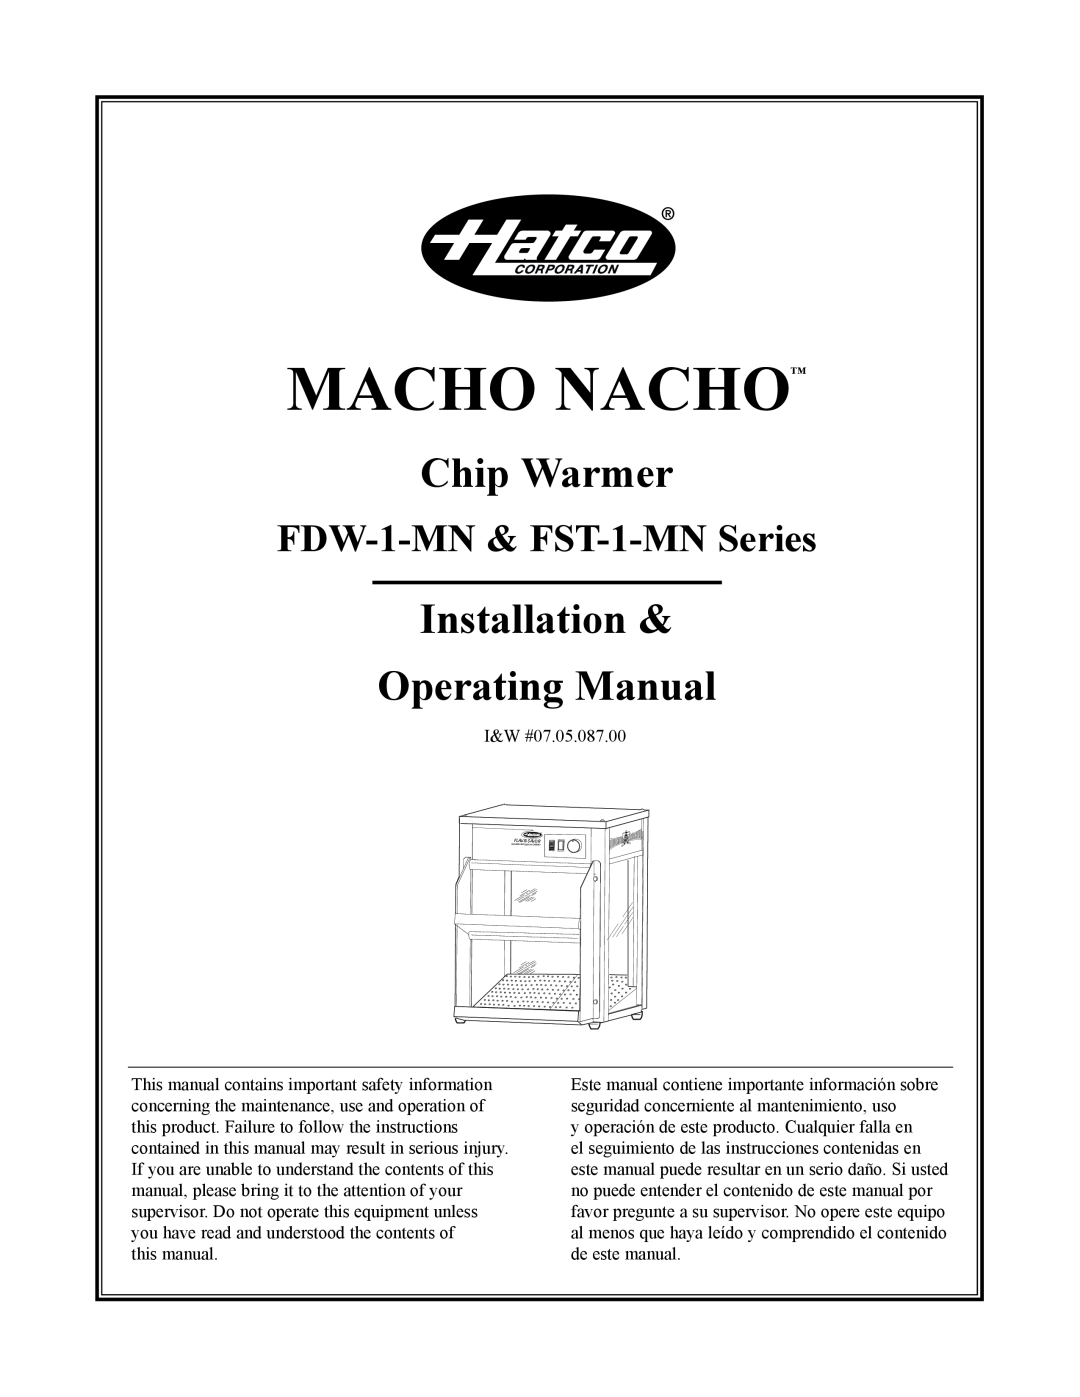 Hatco manual Macho Nacho, Chip Warmer, Installation & Operating Manual, FDW-1-MN& FST-1-MNSeries 